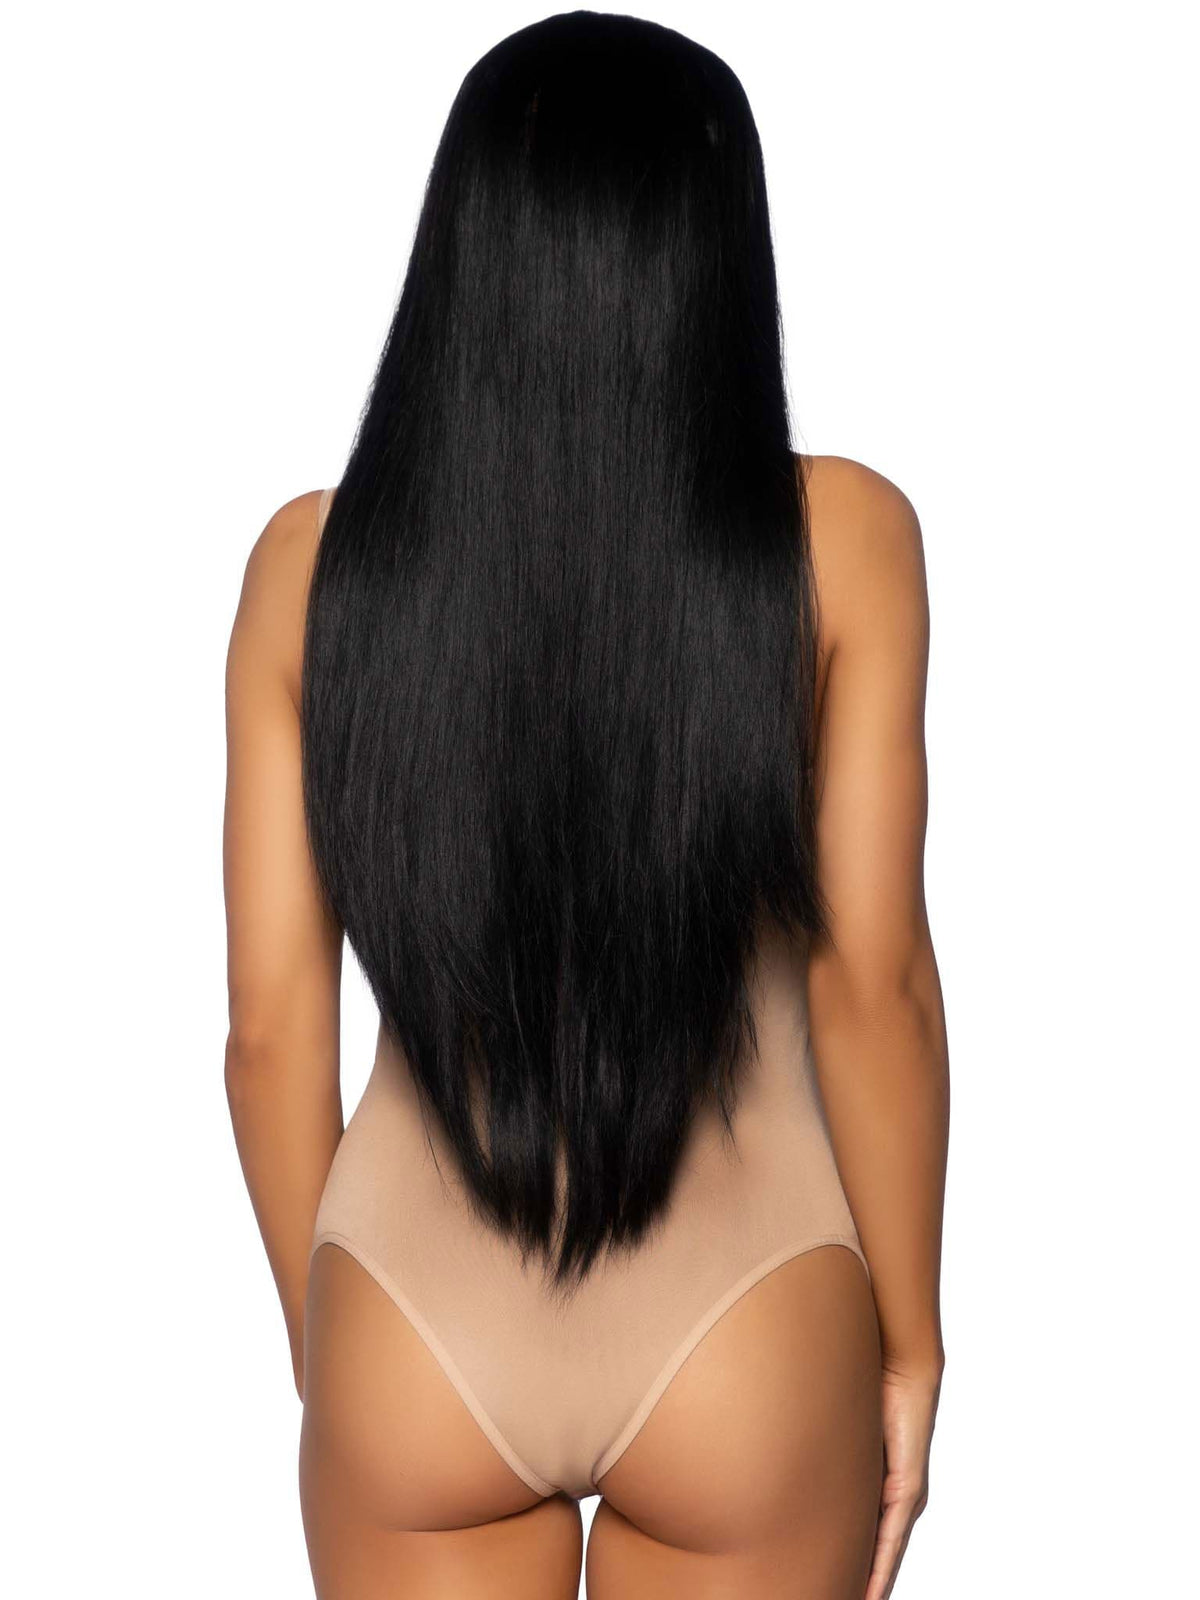 33 inch long straight wig black